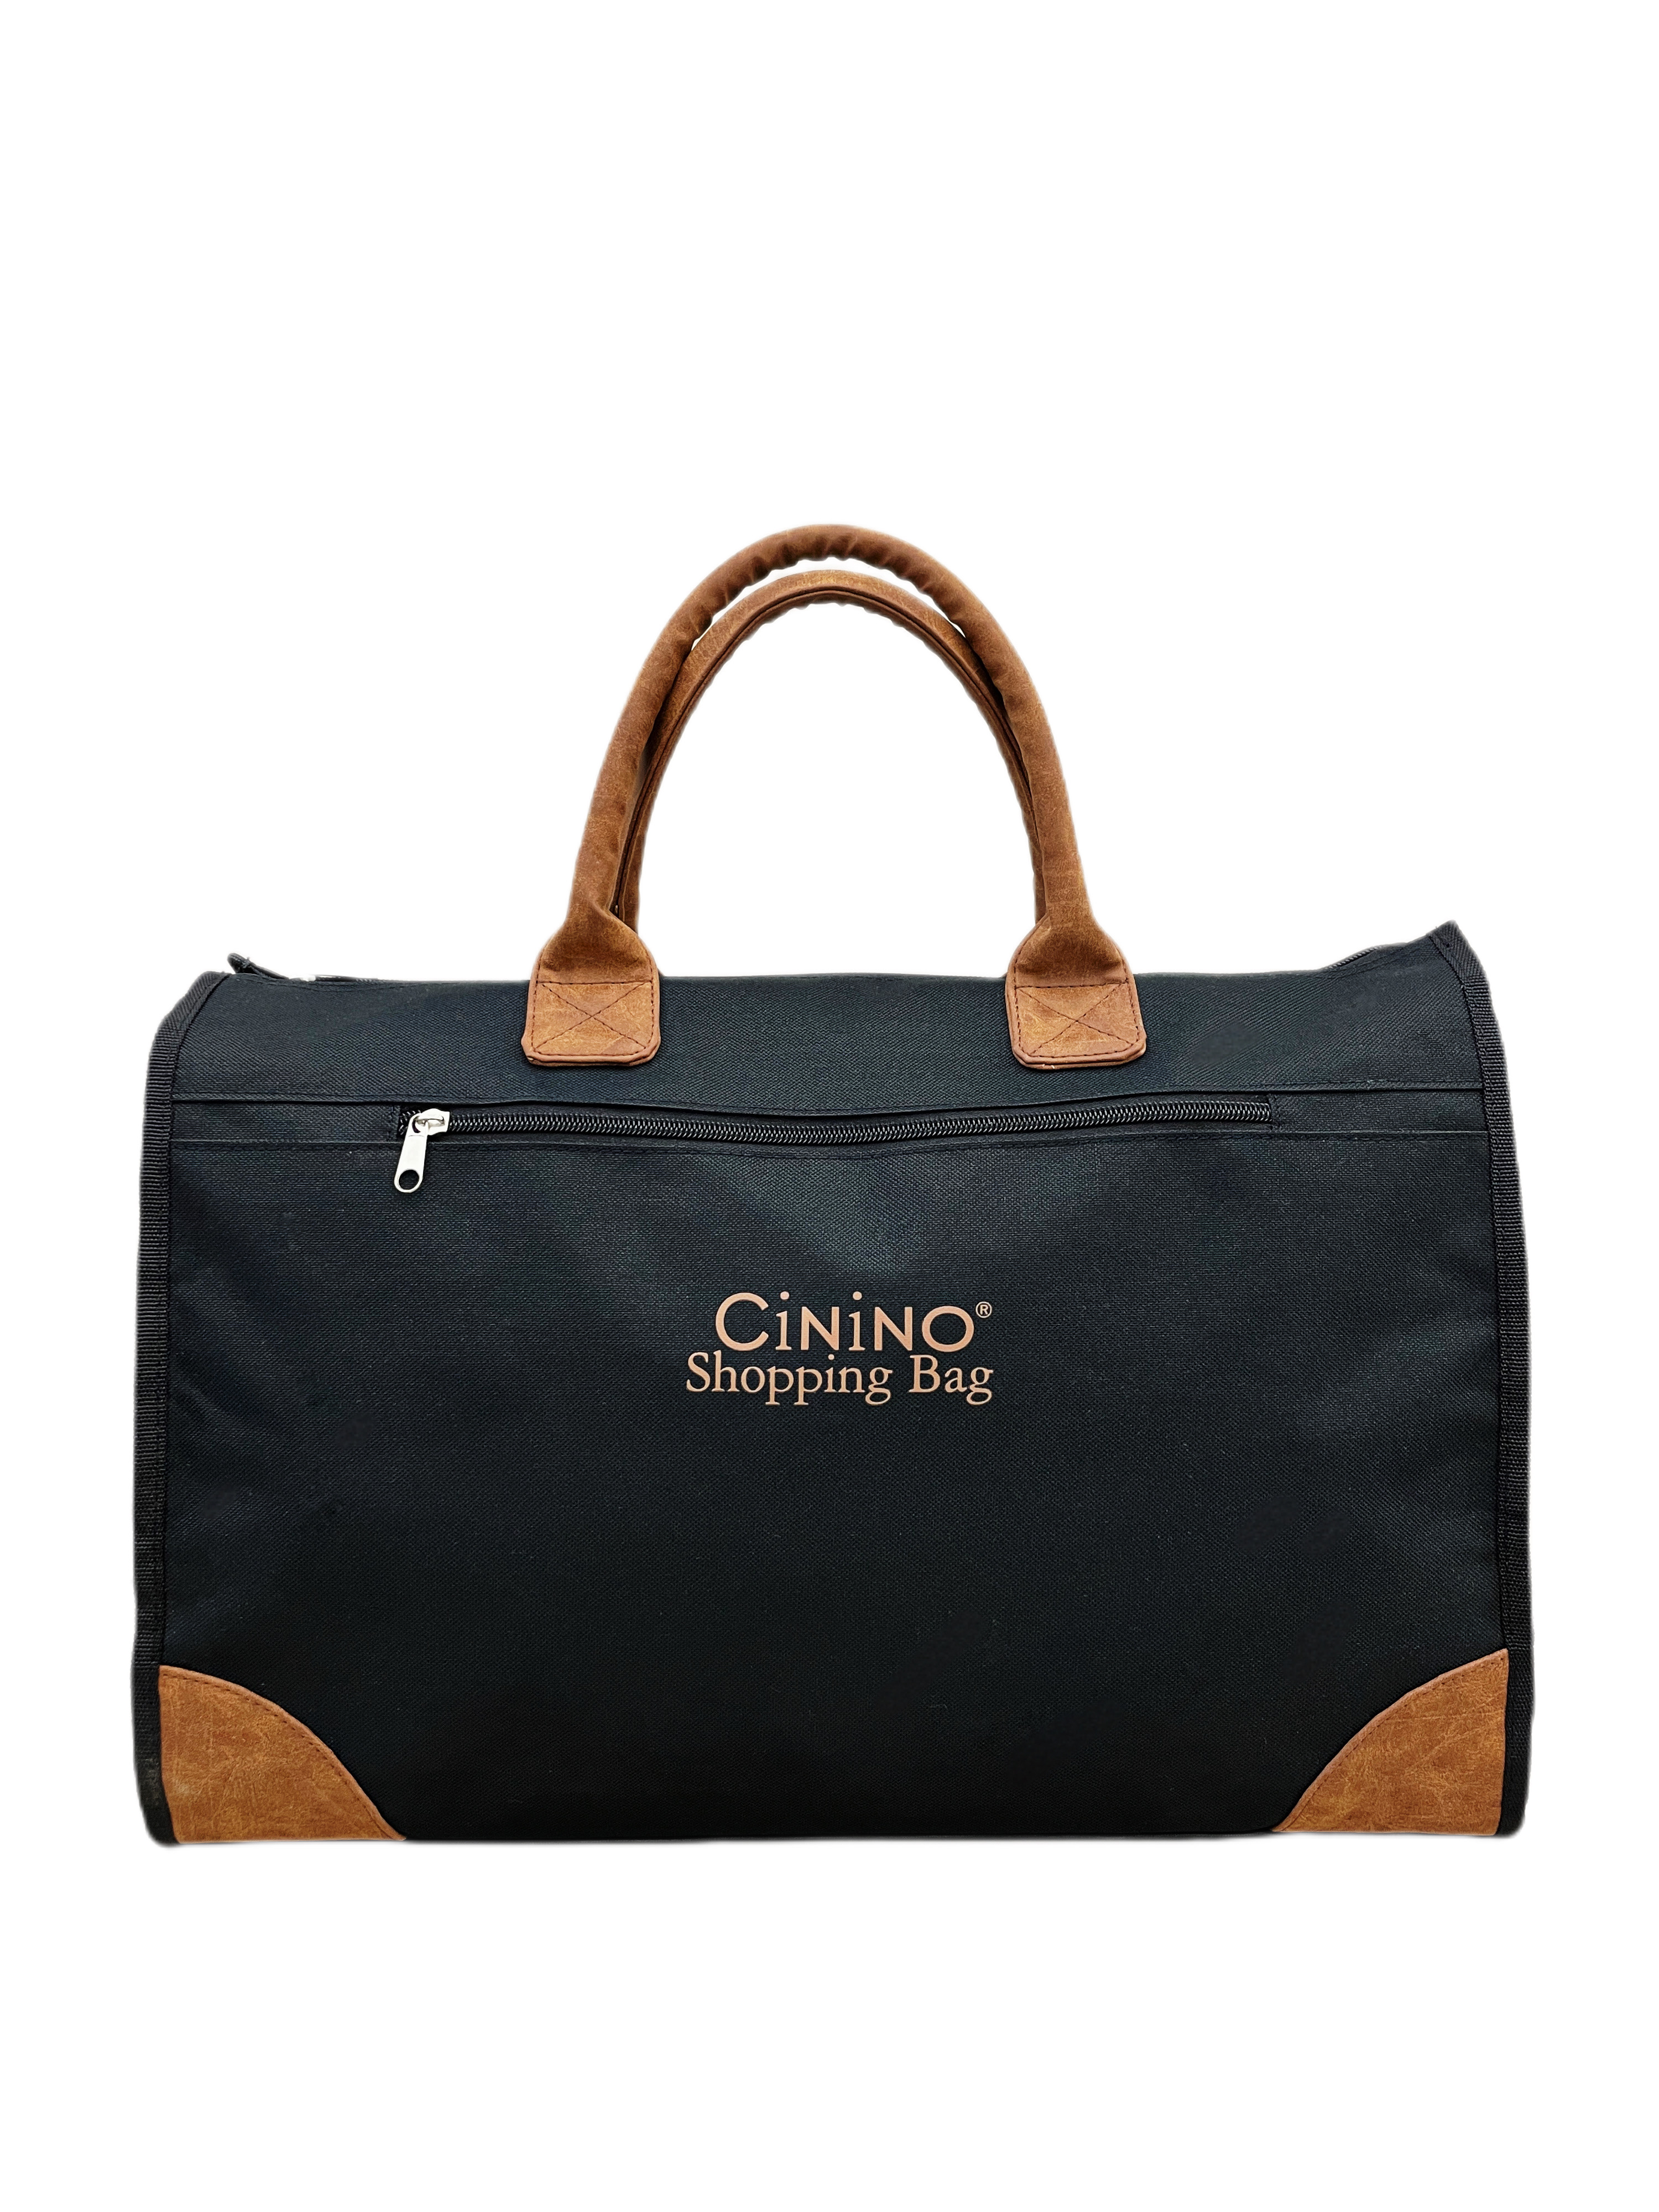 C9020 Cinino Shopping Bag